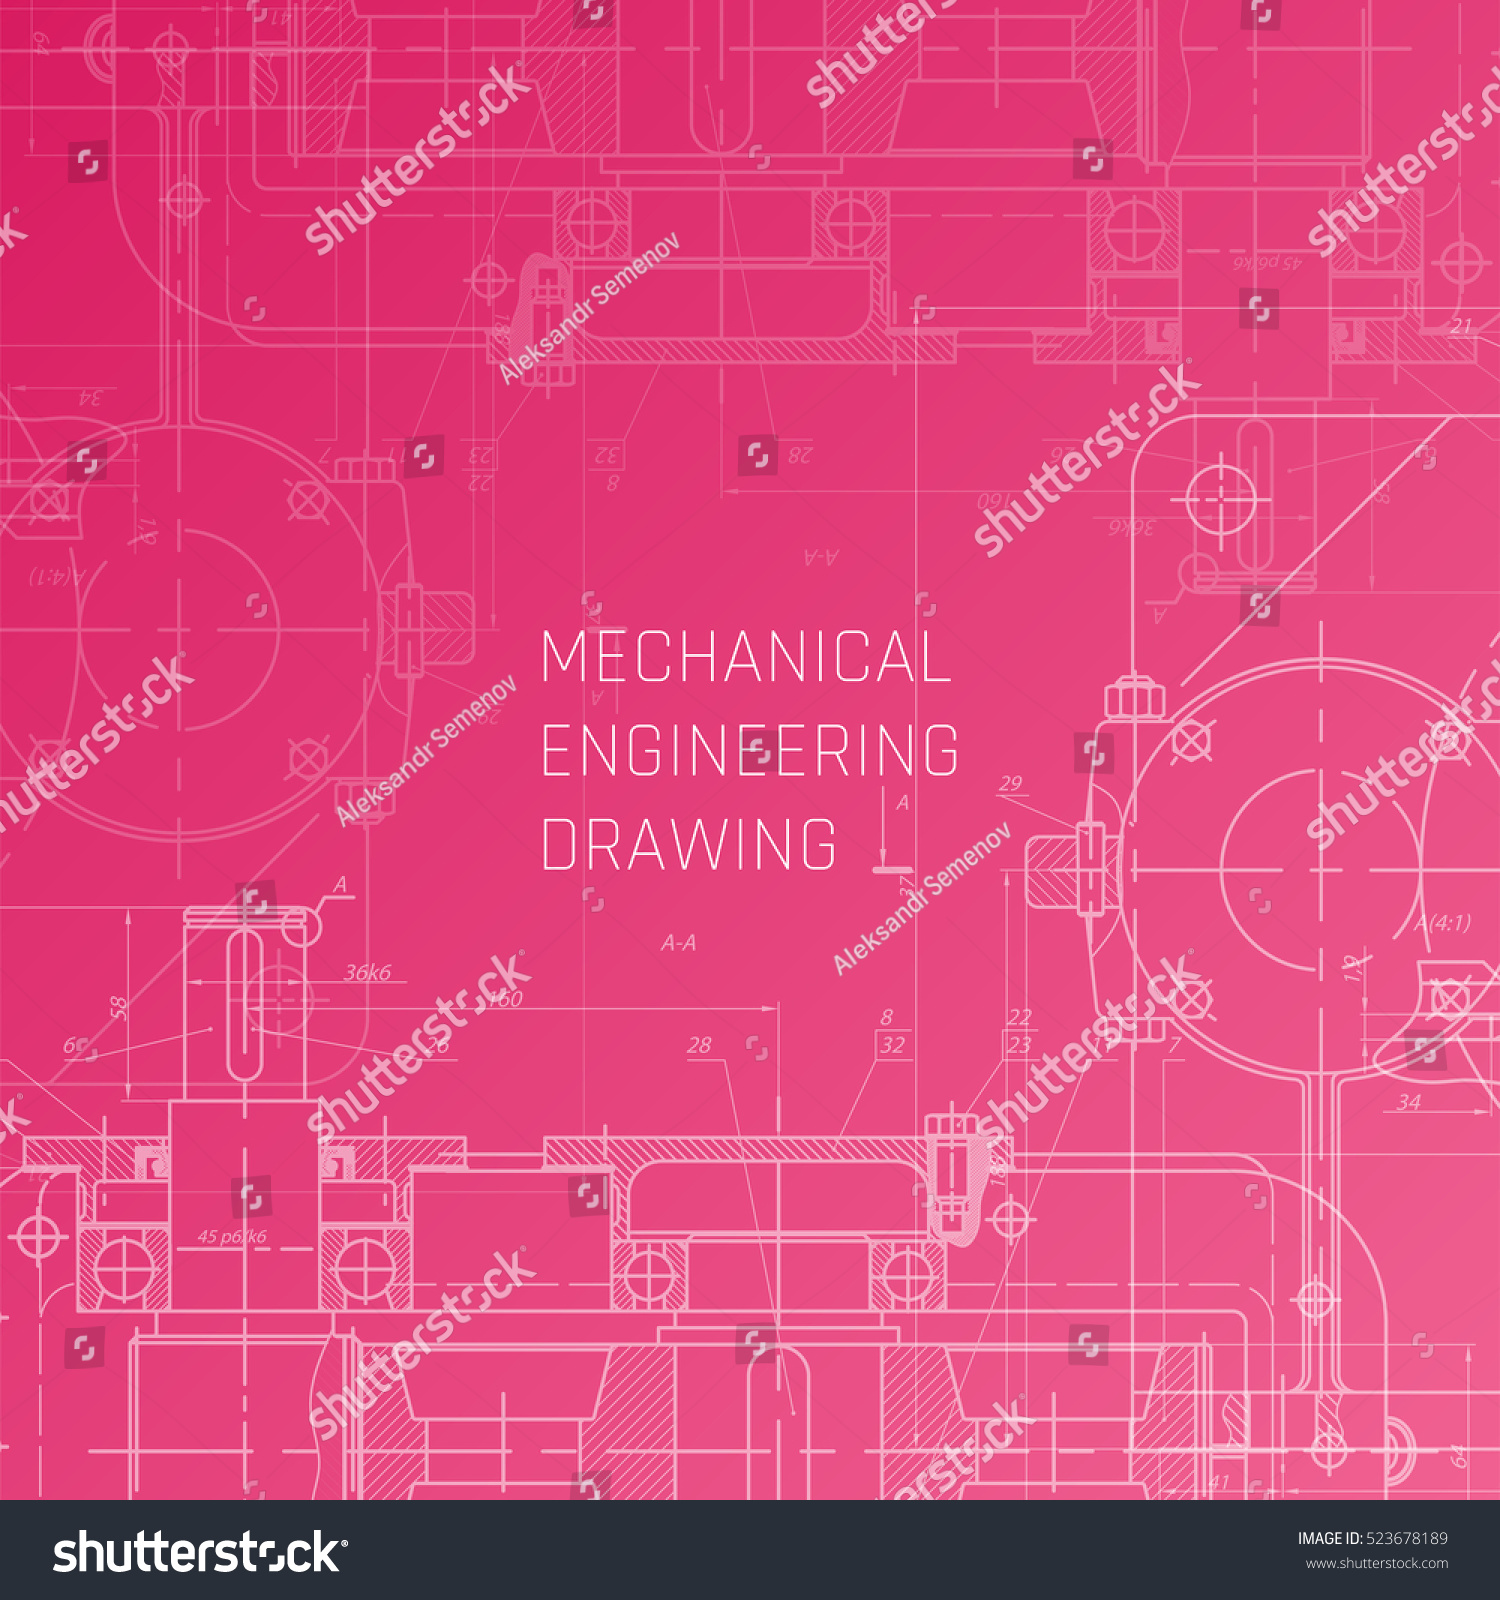 mechanical-engineering-drawing-engineering-drawing-background